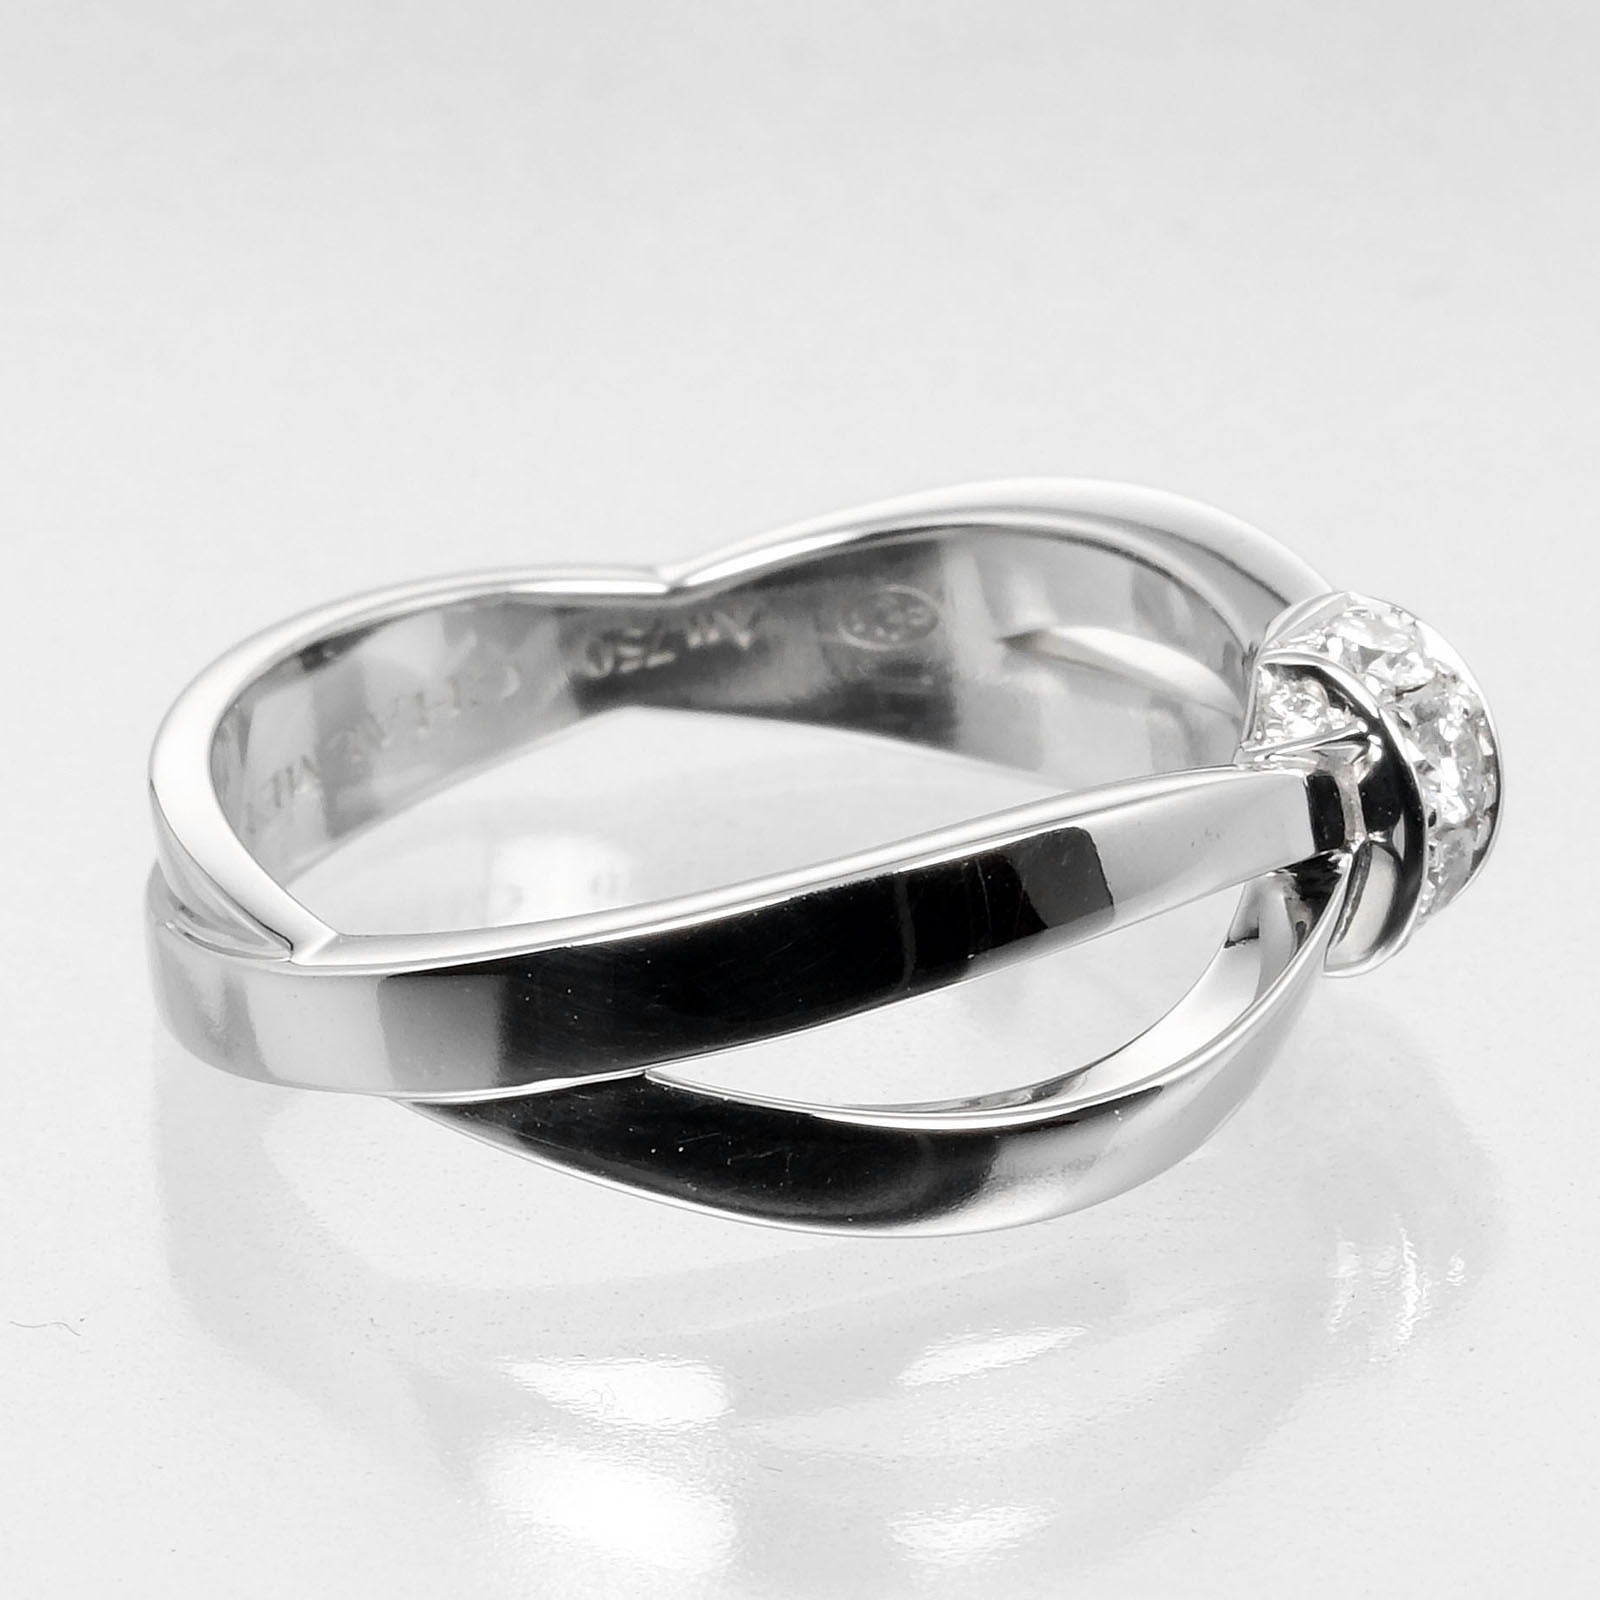 Chaumet Lian Seduction 13.5 Ring Ring K18 WG White G Diamond  5.7g A